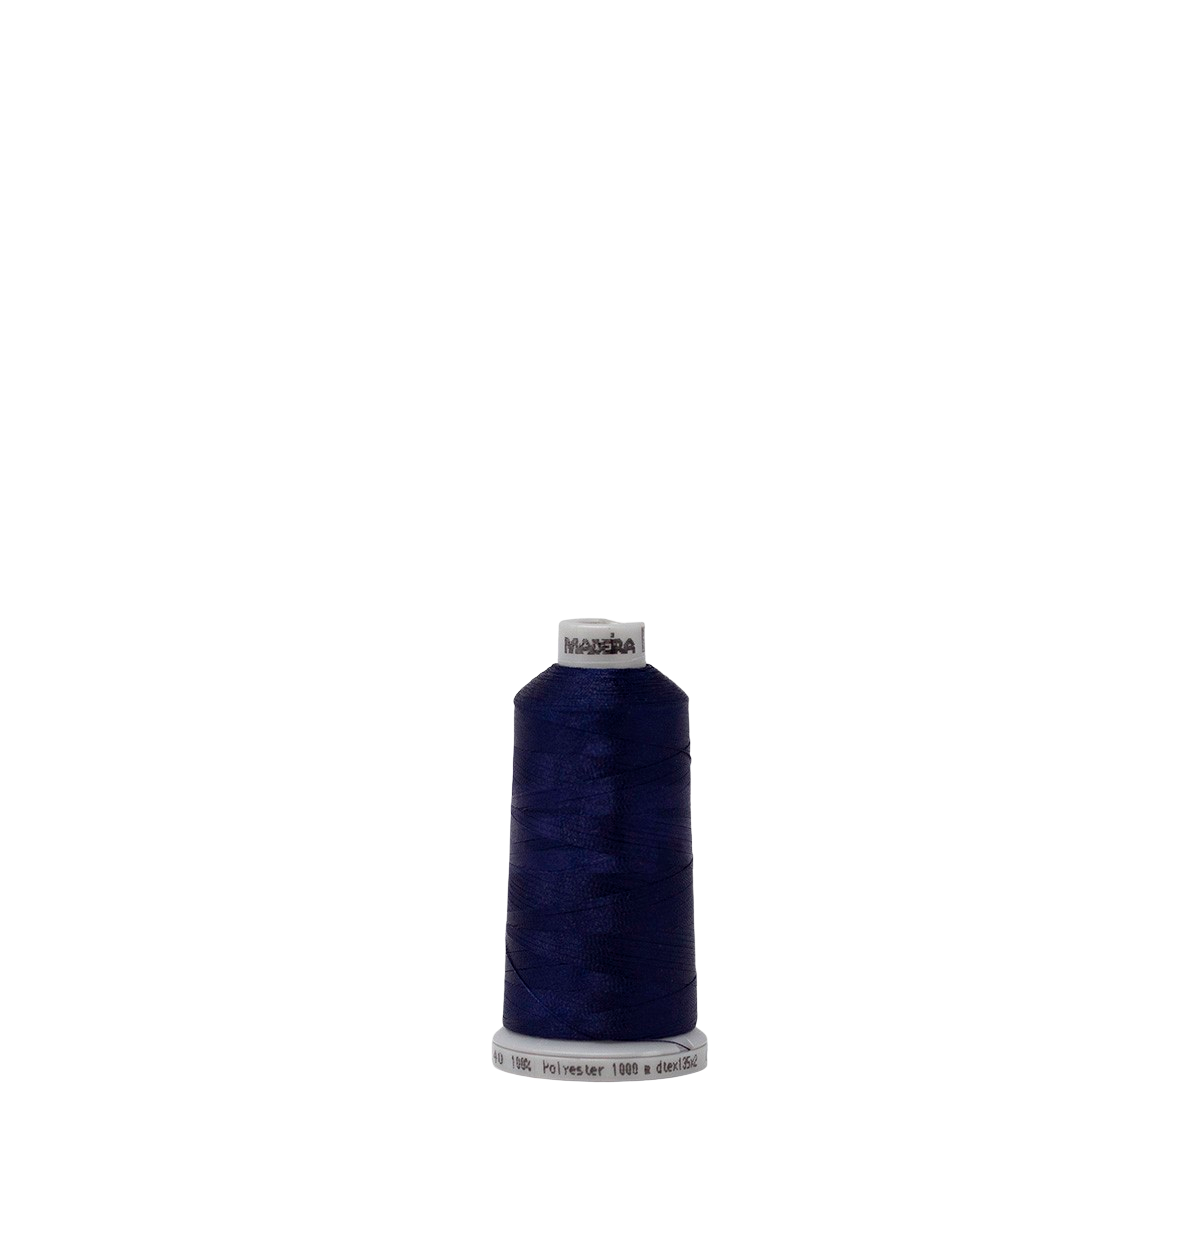 Oxford Blue 1743 #40 Weight Madeira Polyneon Thread